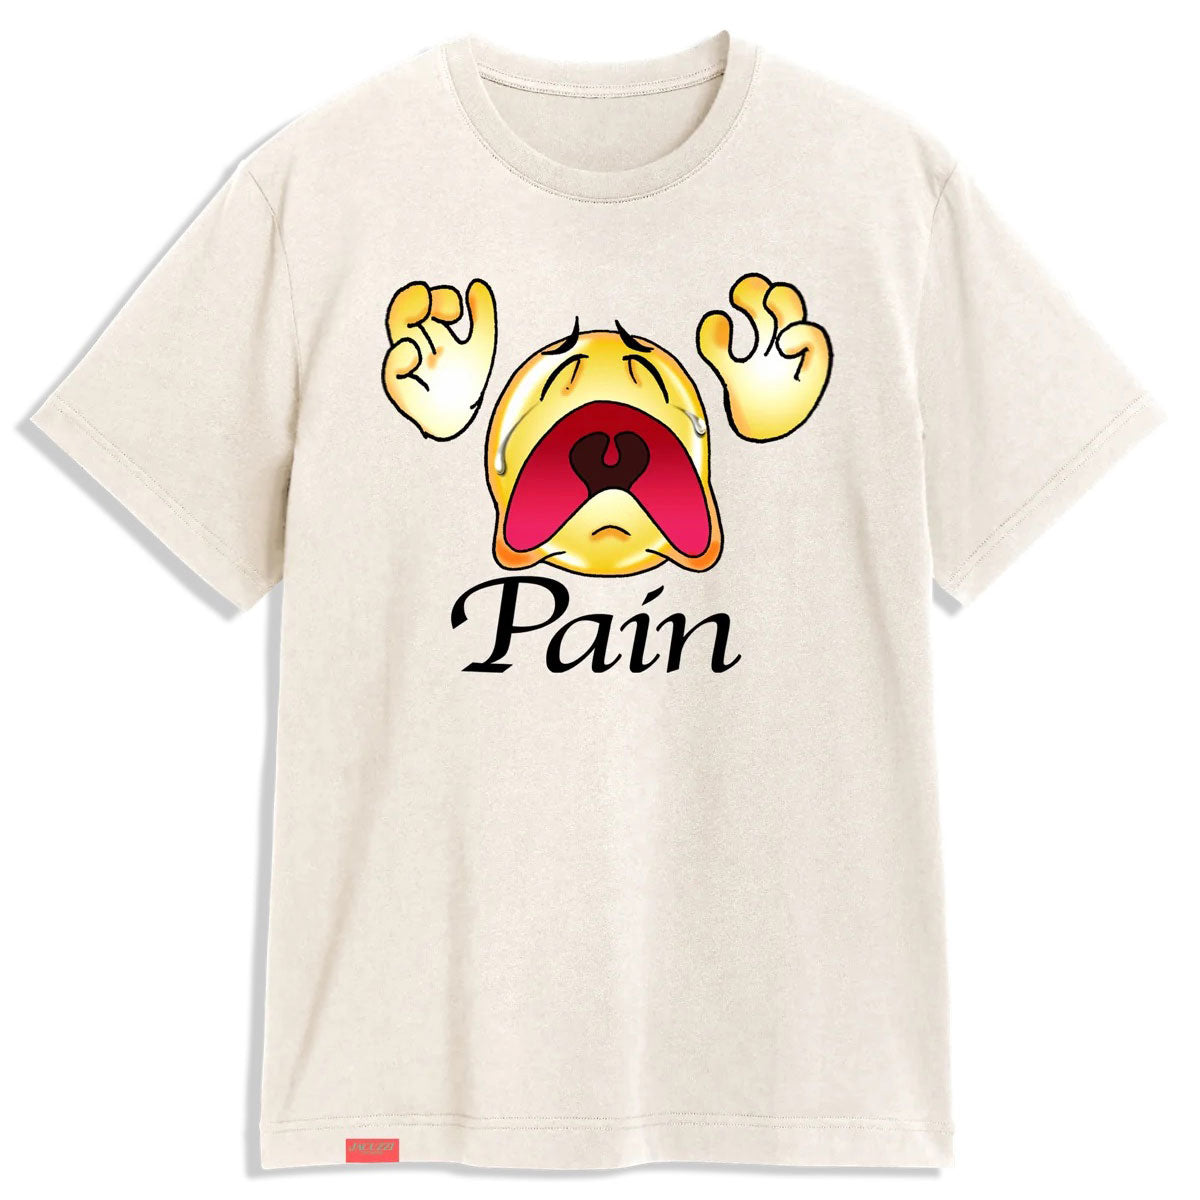 Jacuzzi Pain Premium T-Shirt - Bone image 1